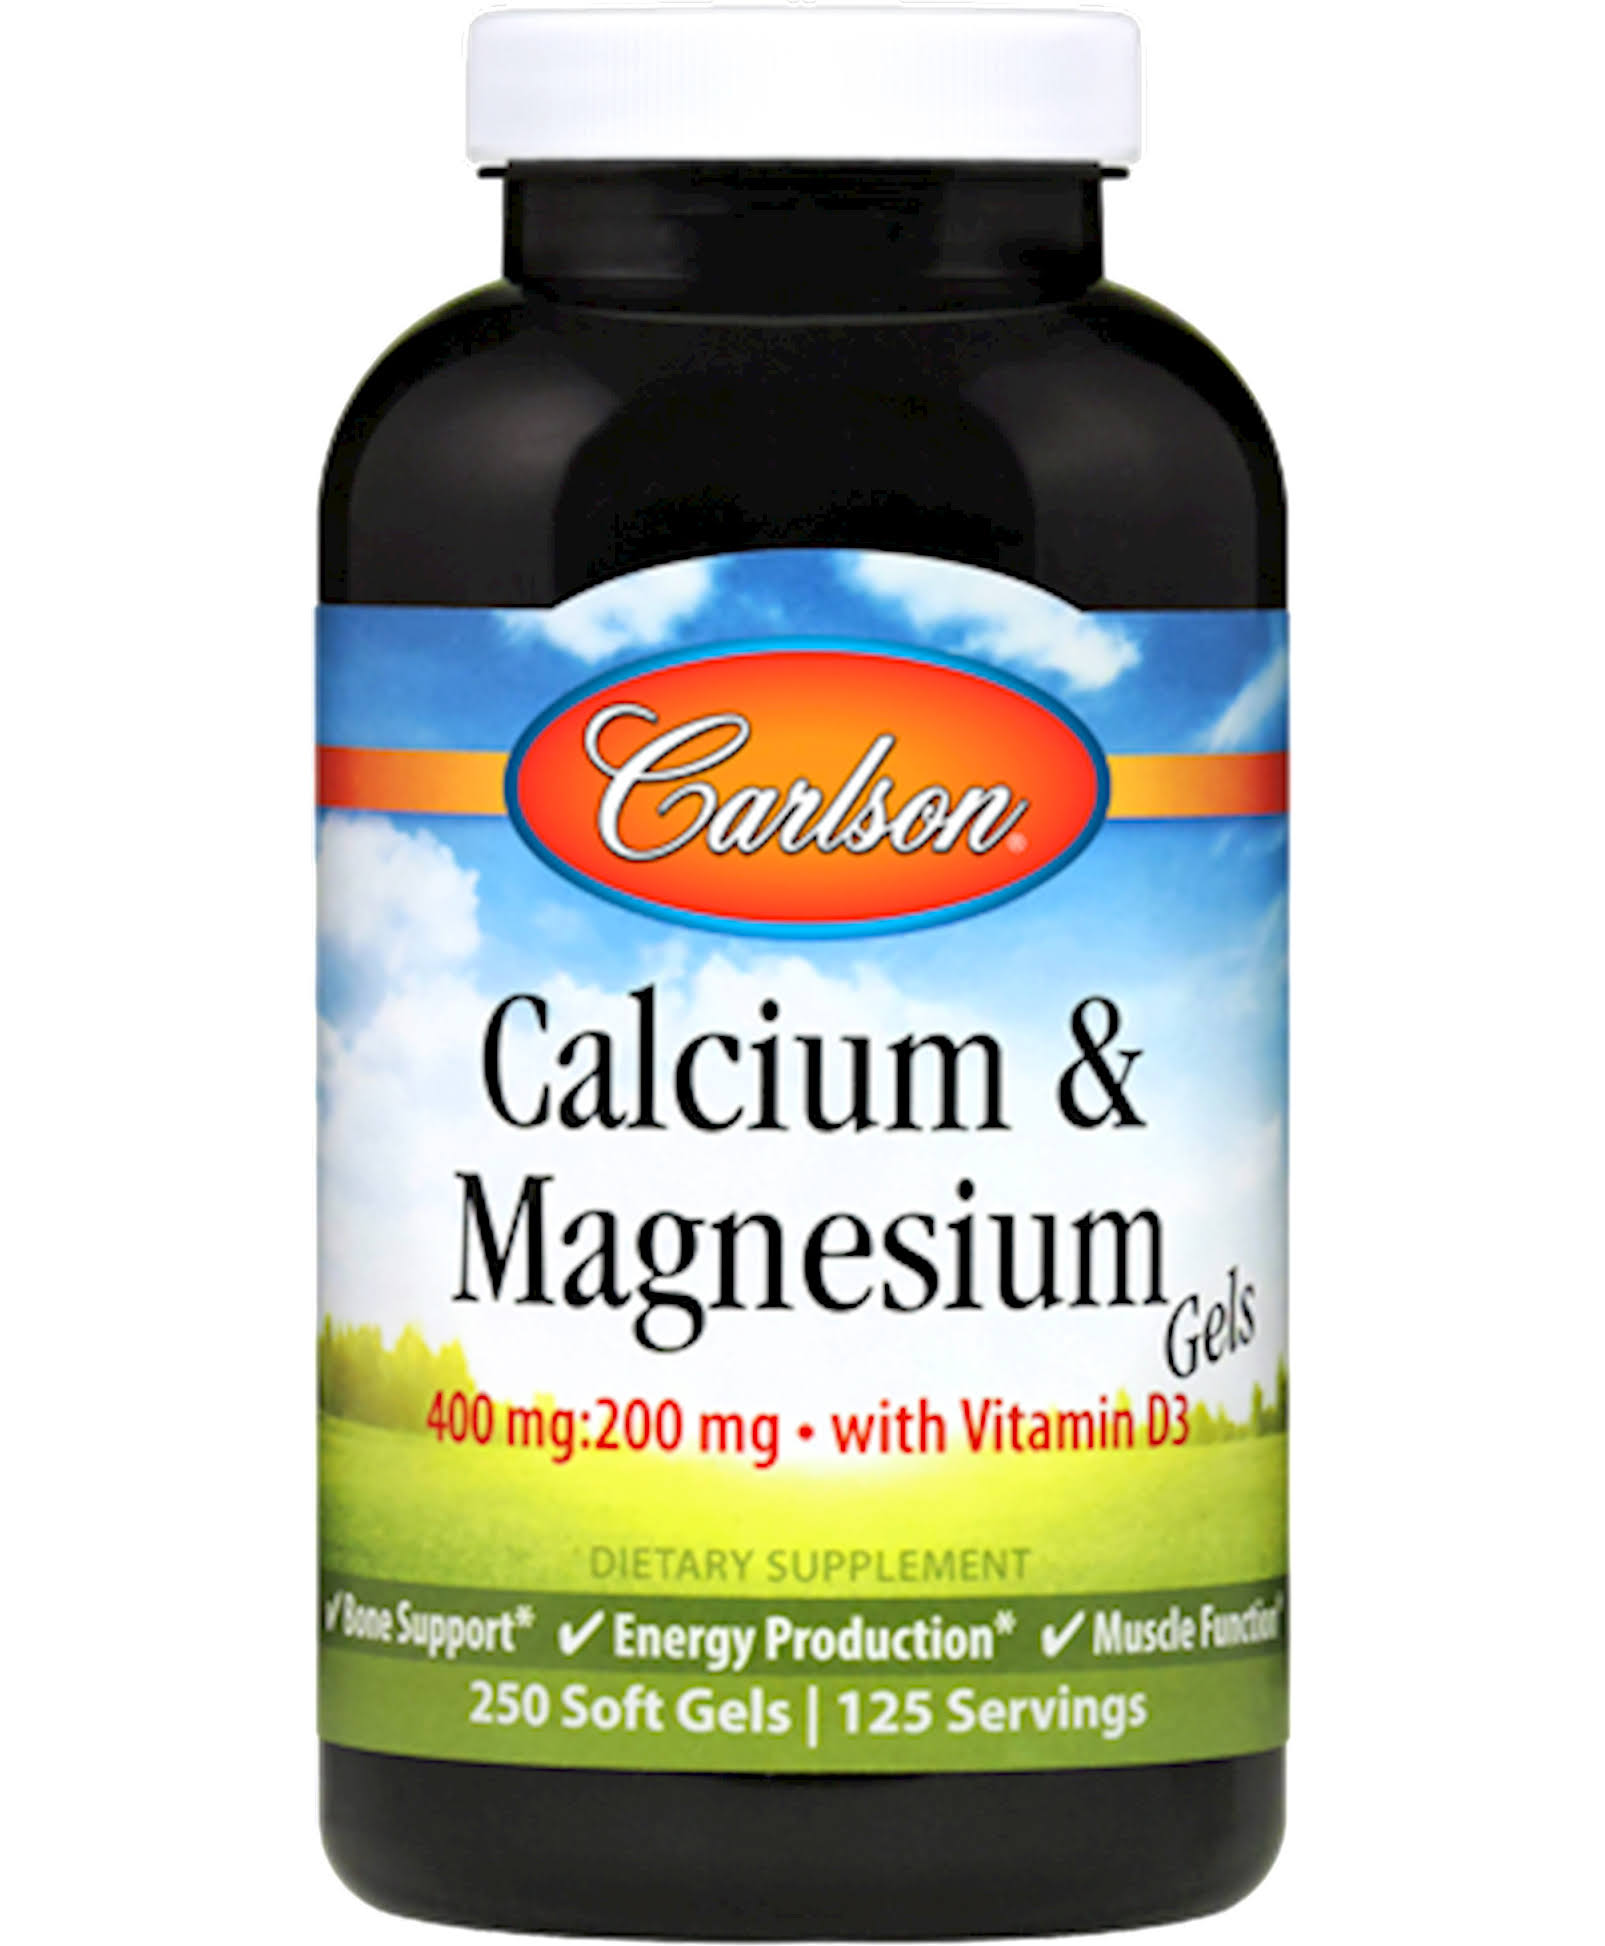 Carlson Labs Liquid Cal-mag Dietary Supplement - 250ct